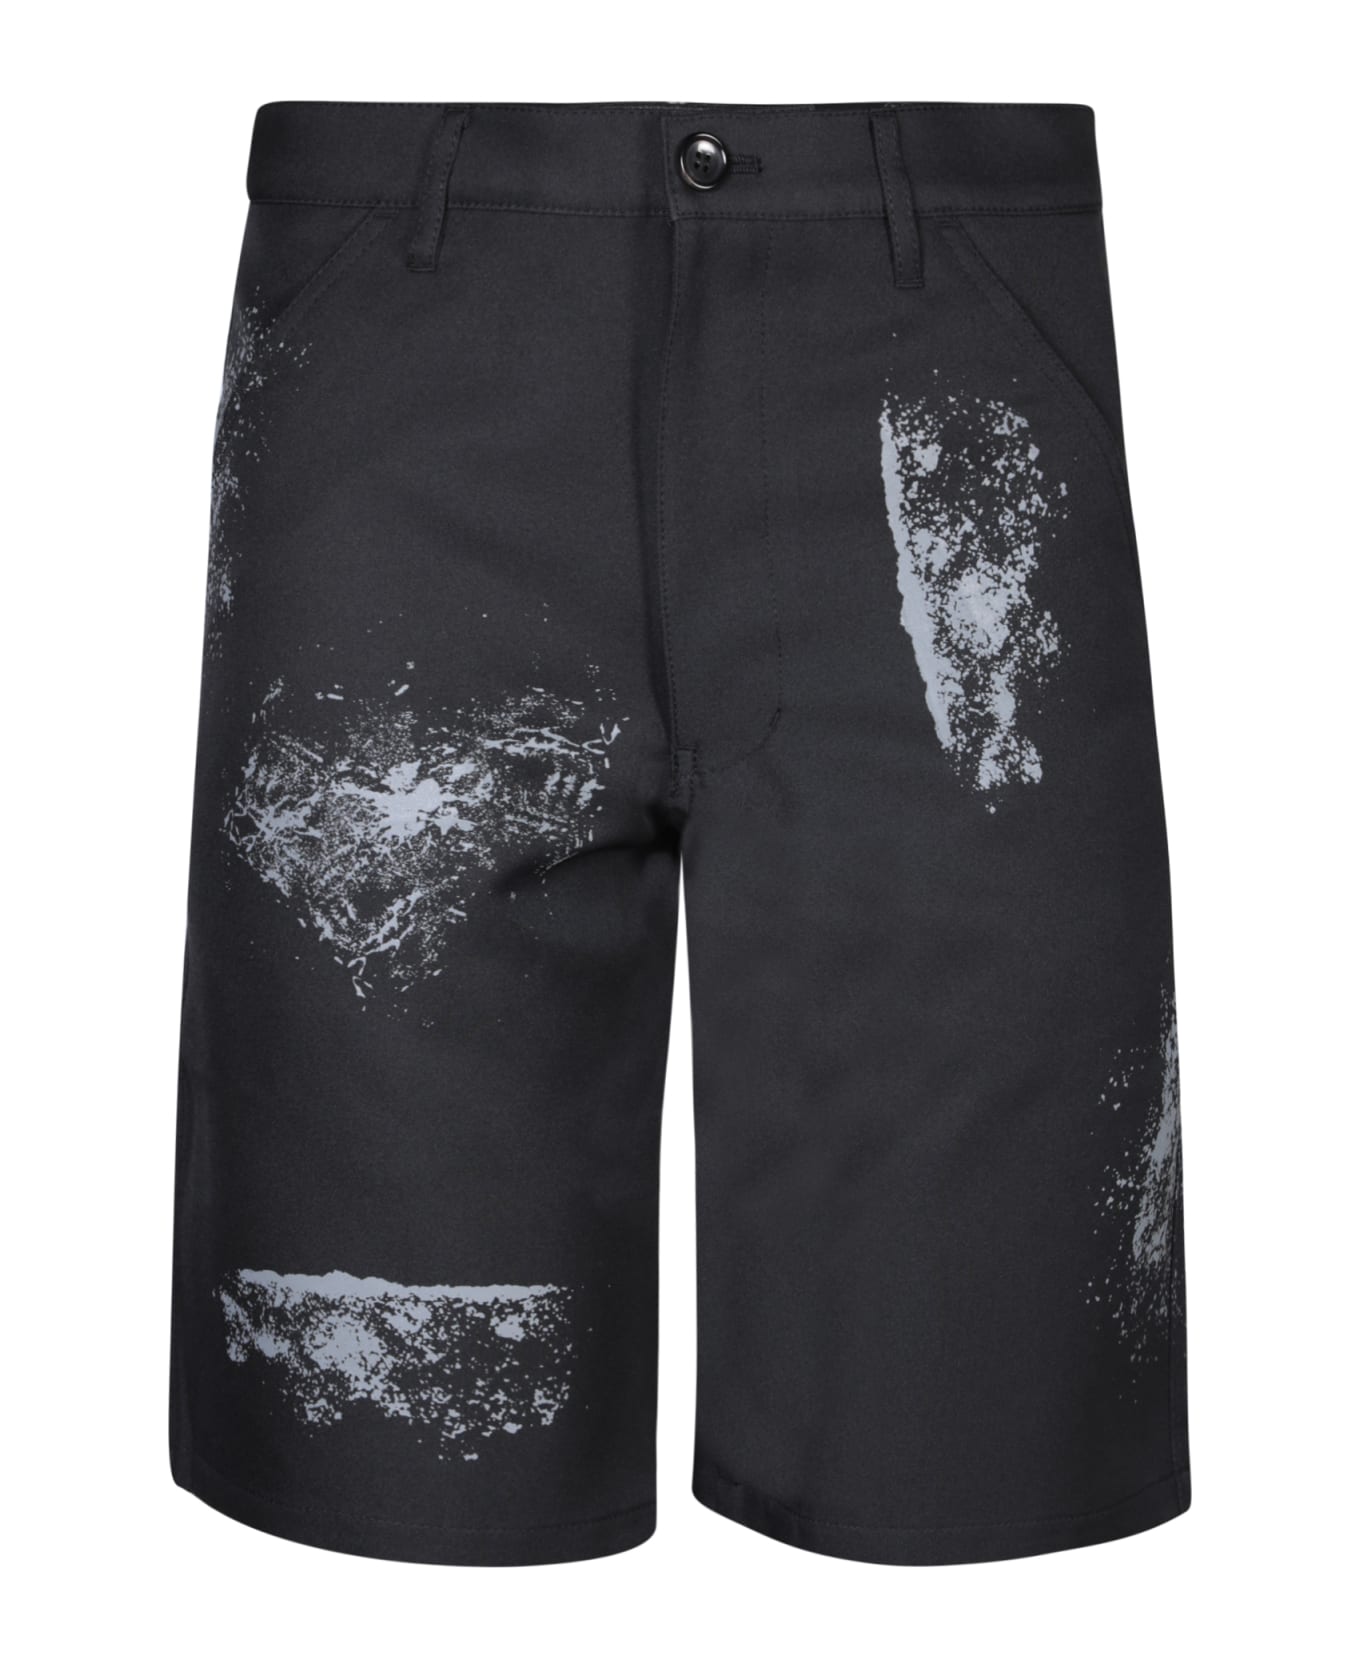 Comme des Garçons Shirt Hand Print Black Bermuda Shorts - Black ショートパンツ